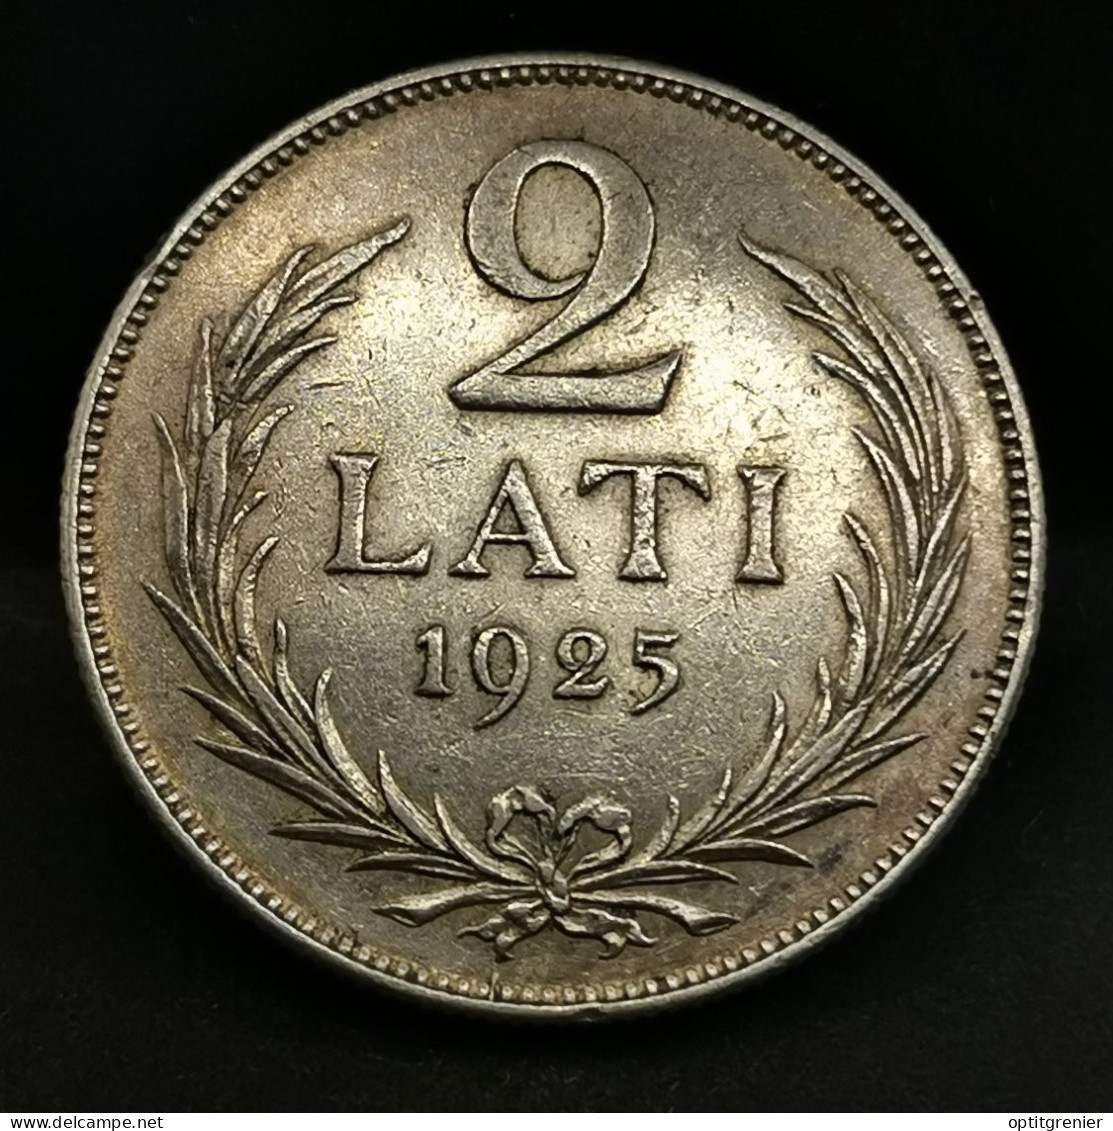 2 LATI 1925 ARGENT LETTONIE / SILVER - Letland